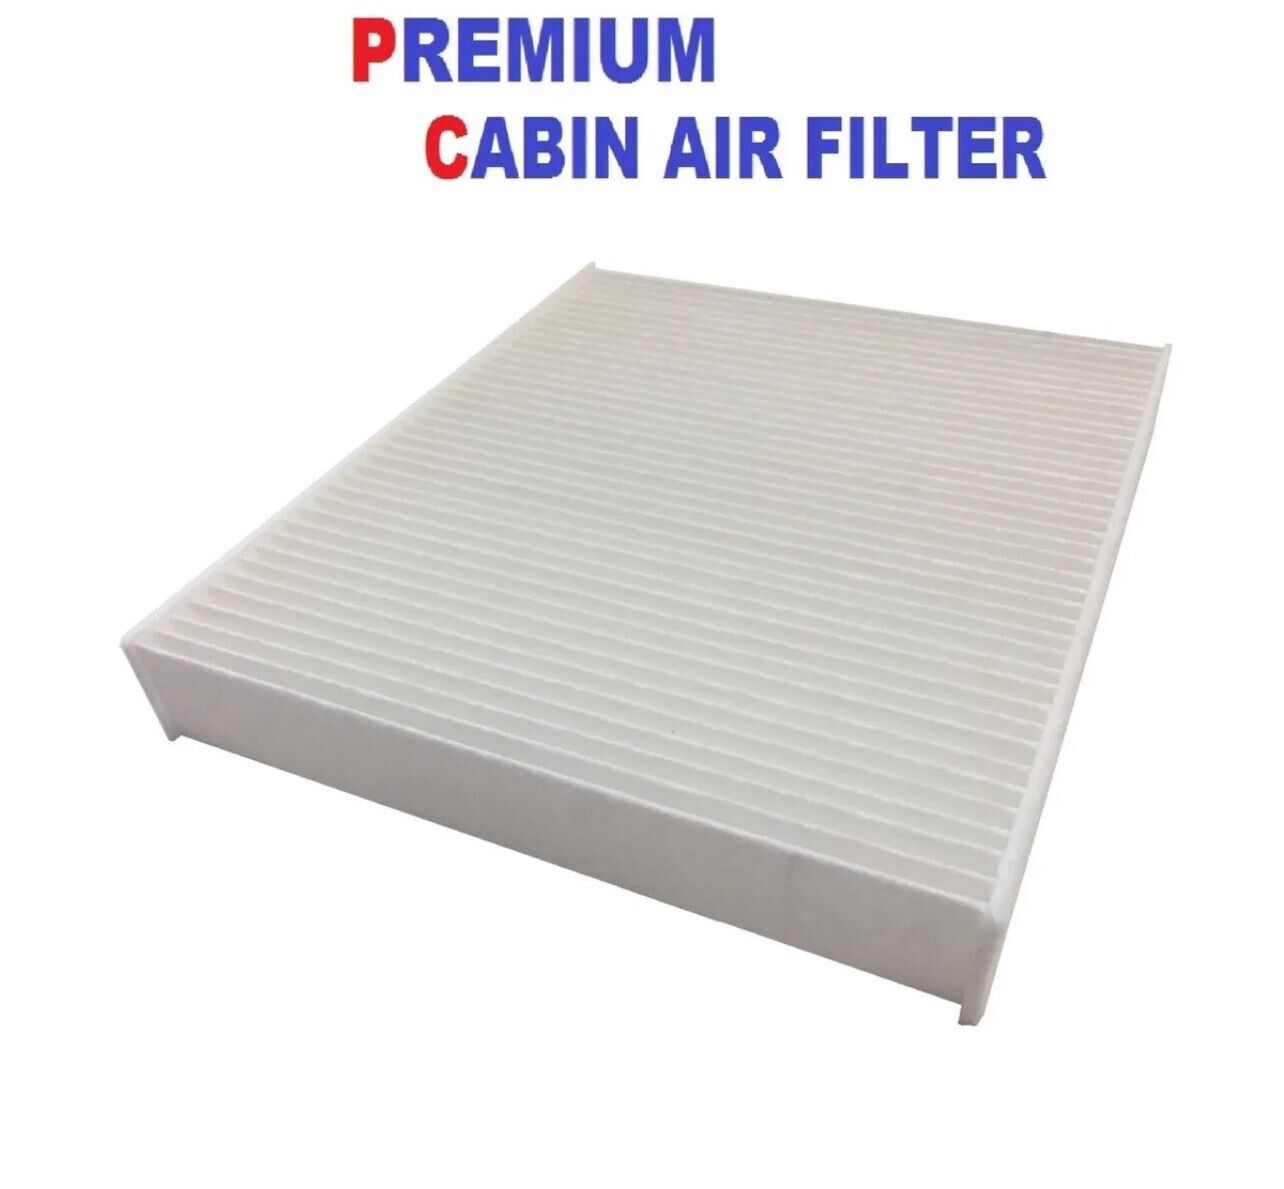 Premium CABIN AIR FILTER FOR NEW SUBARU ASCENT CROSSTREK IMPREZA LEGACY OUTBACK